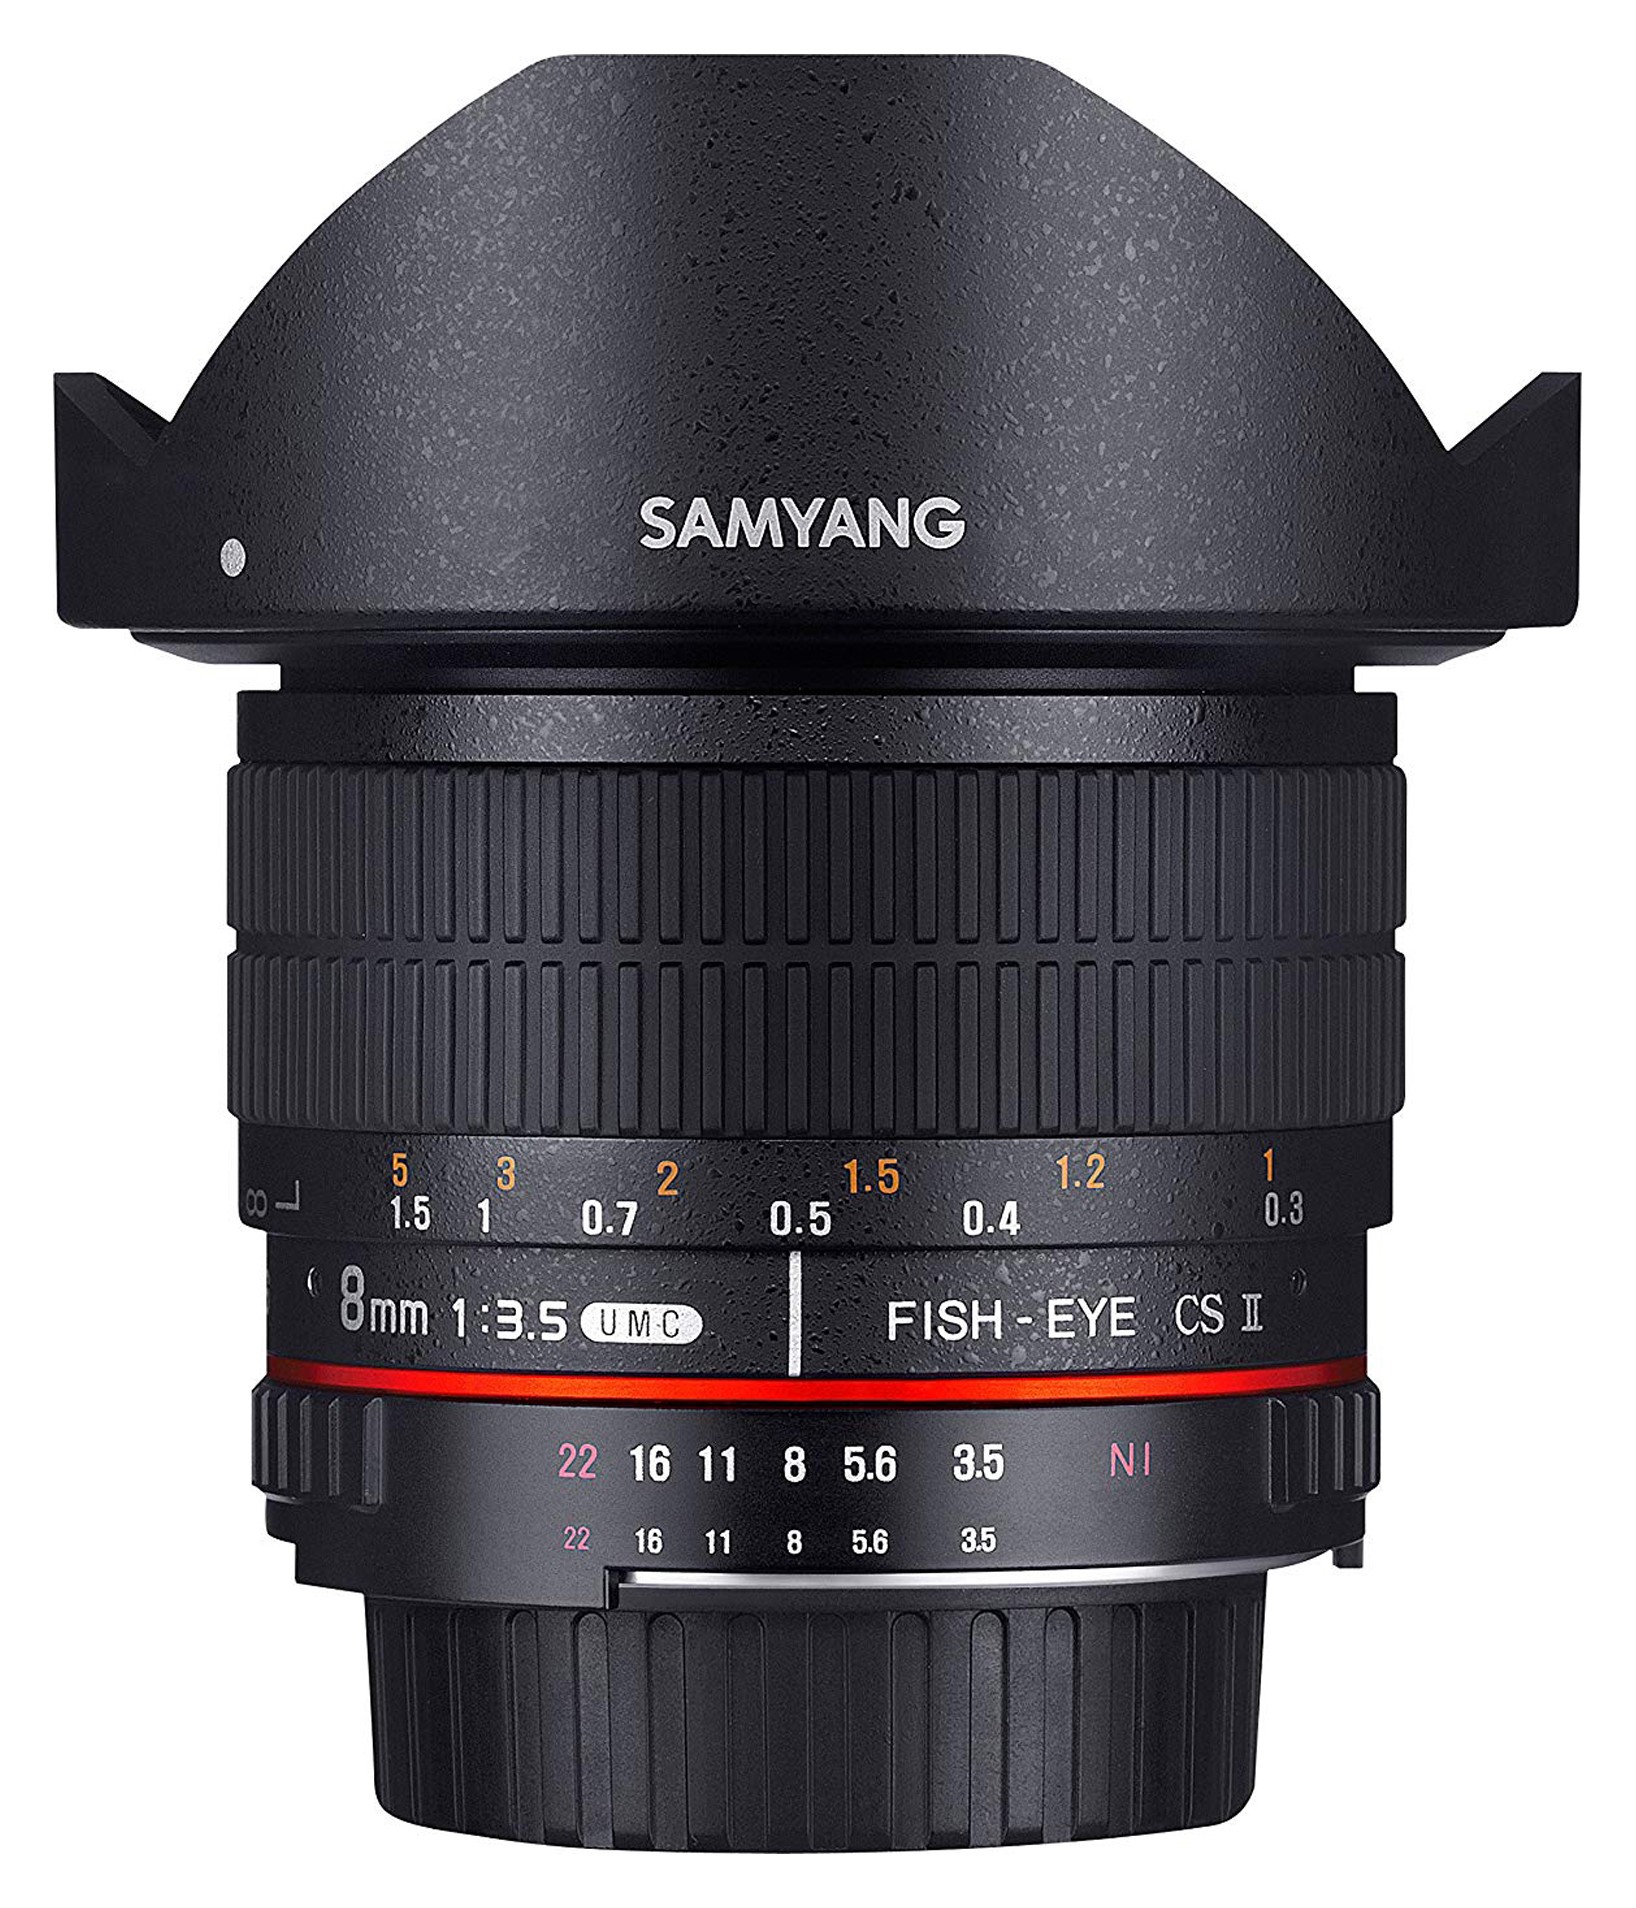 Samyang MF 8mm f3.5 CSII Fisheye lens for Sony E